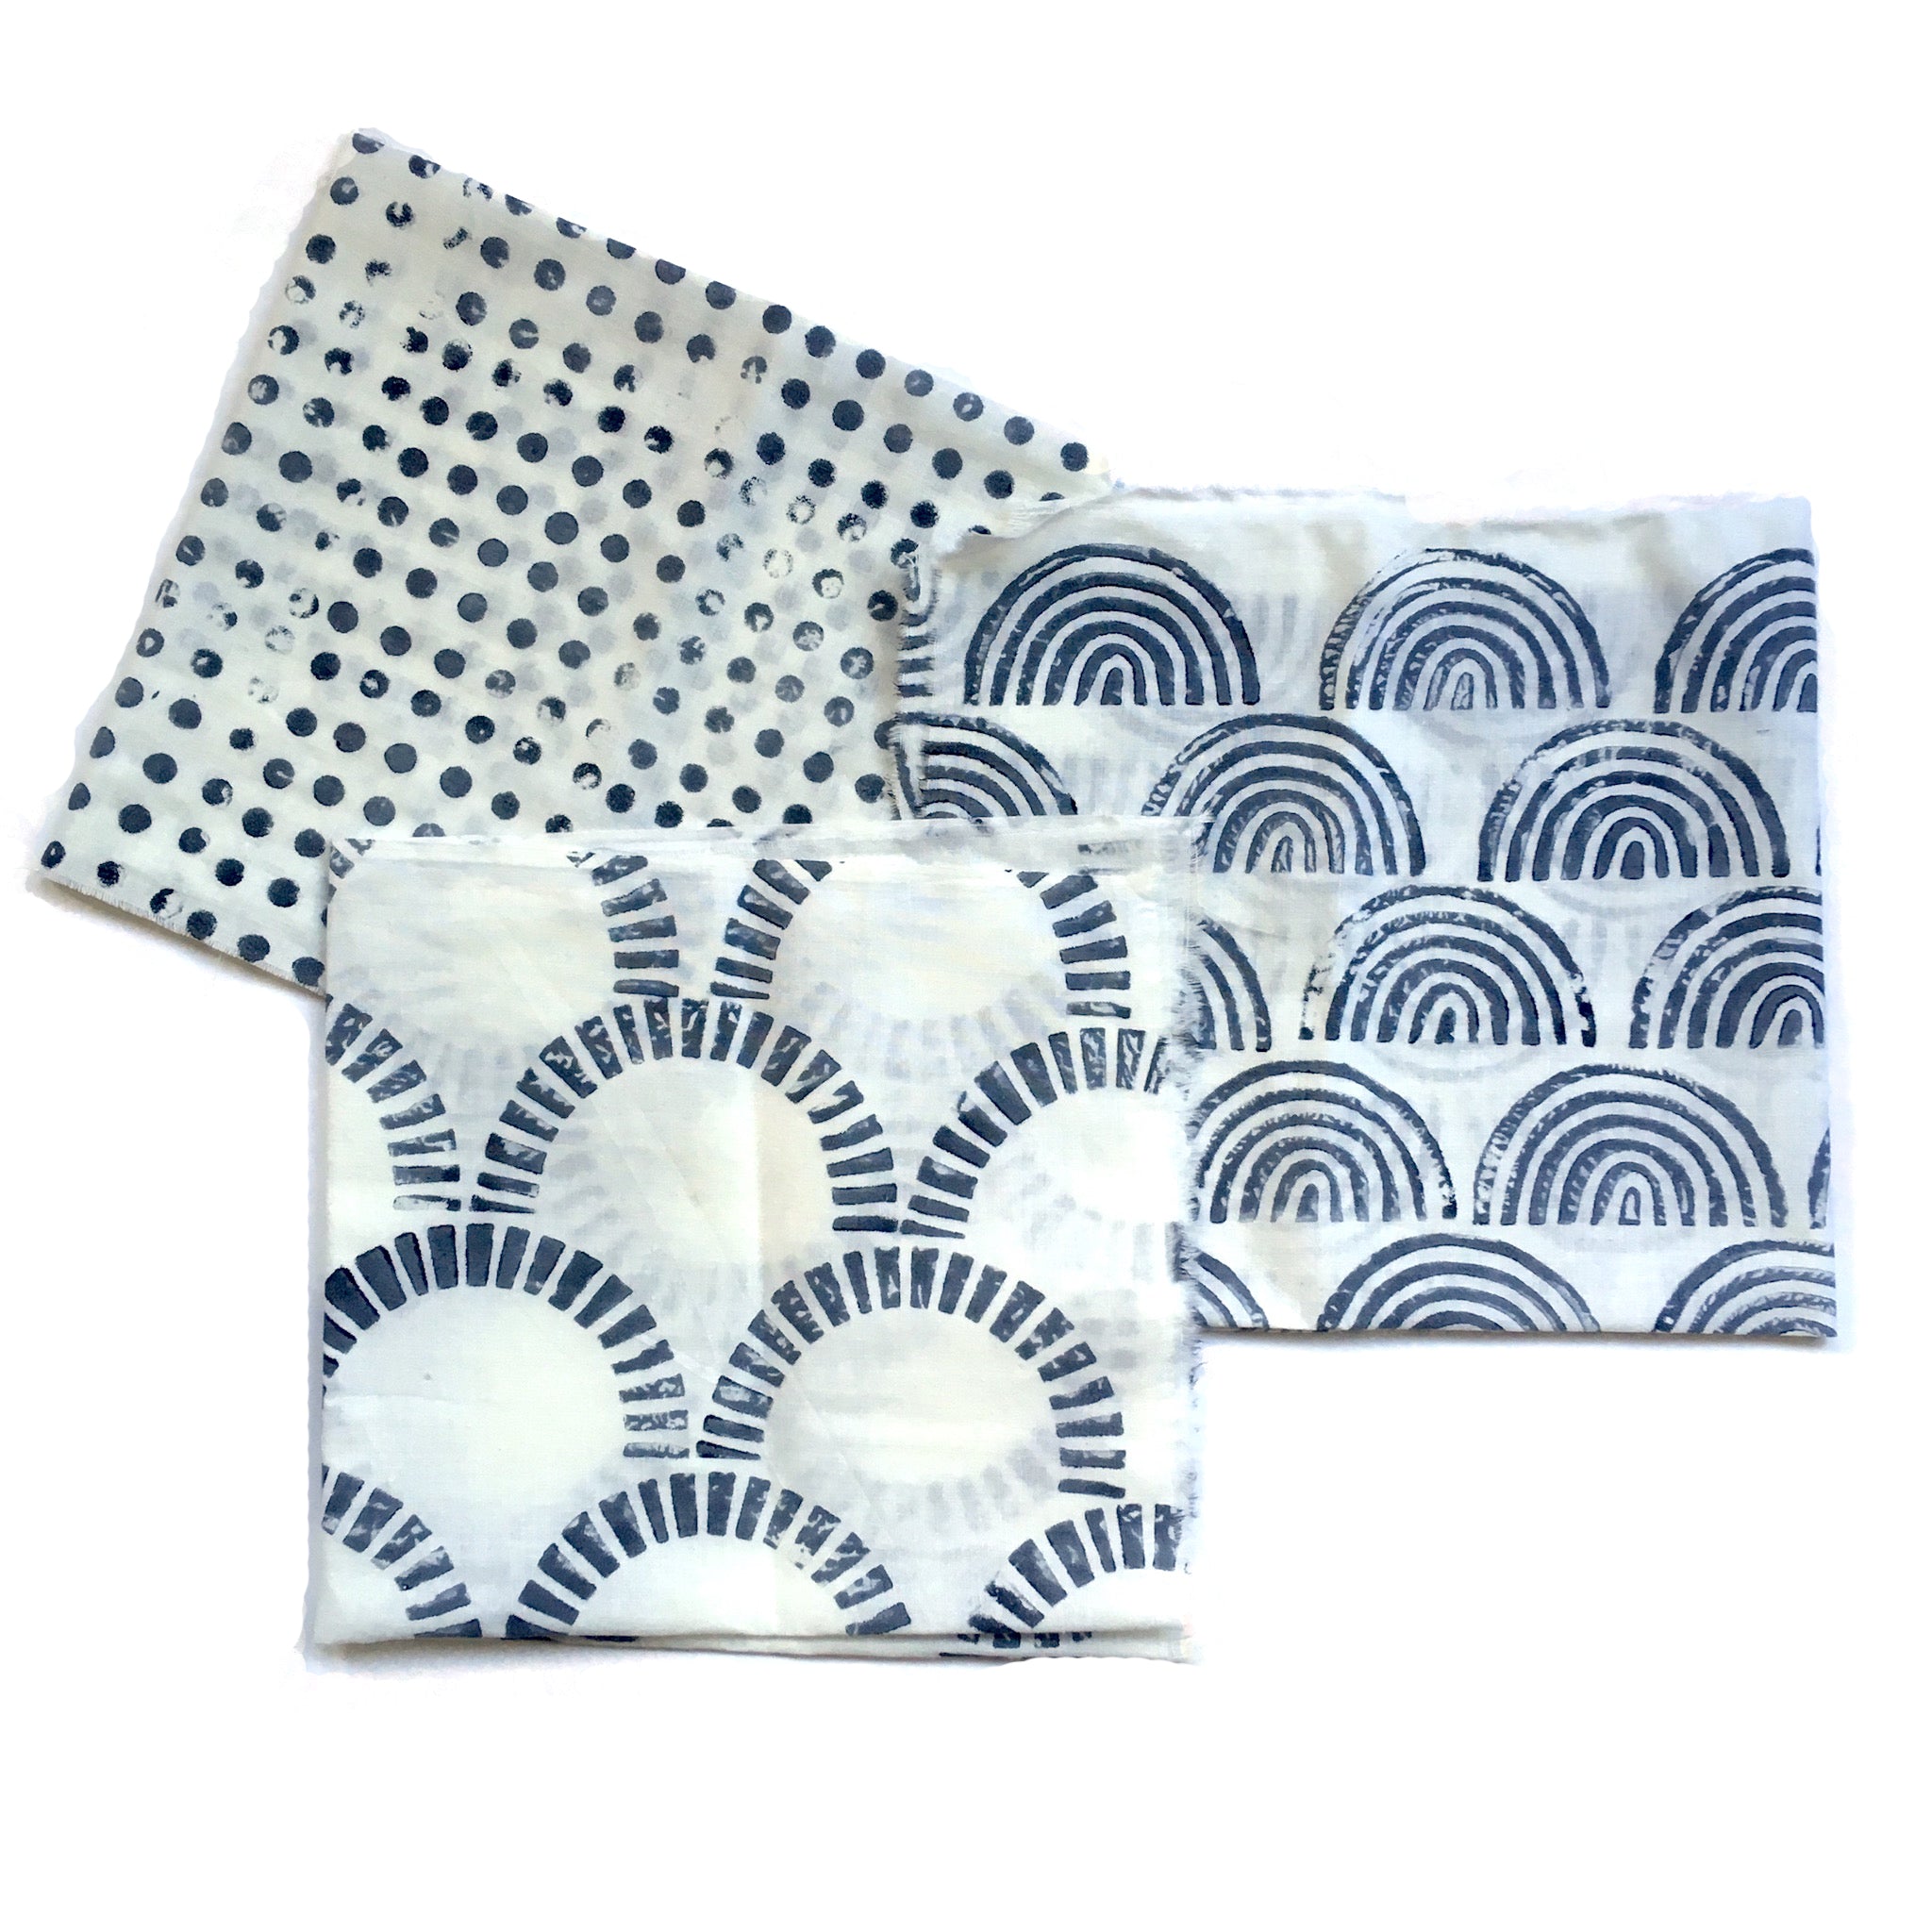 examples of fabrics block printed with indigo